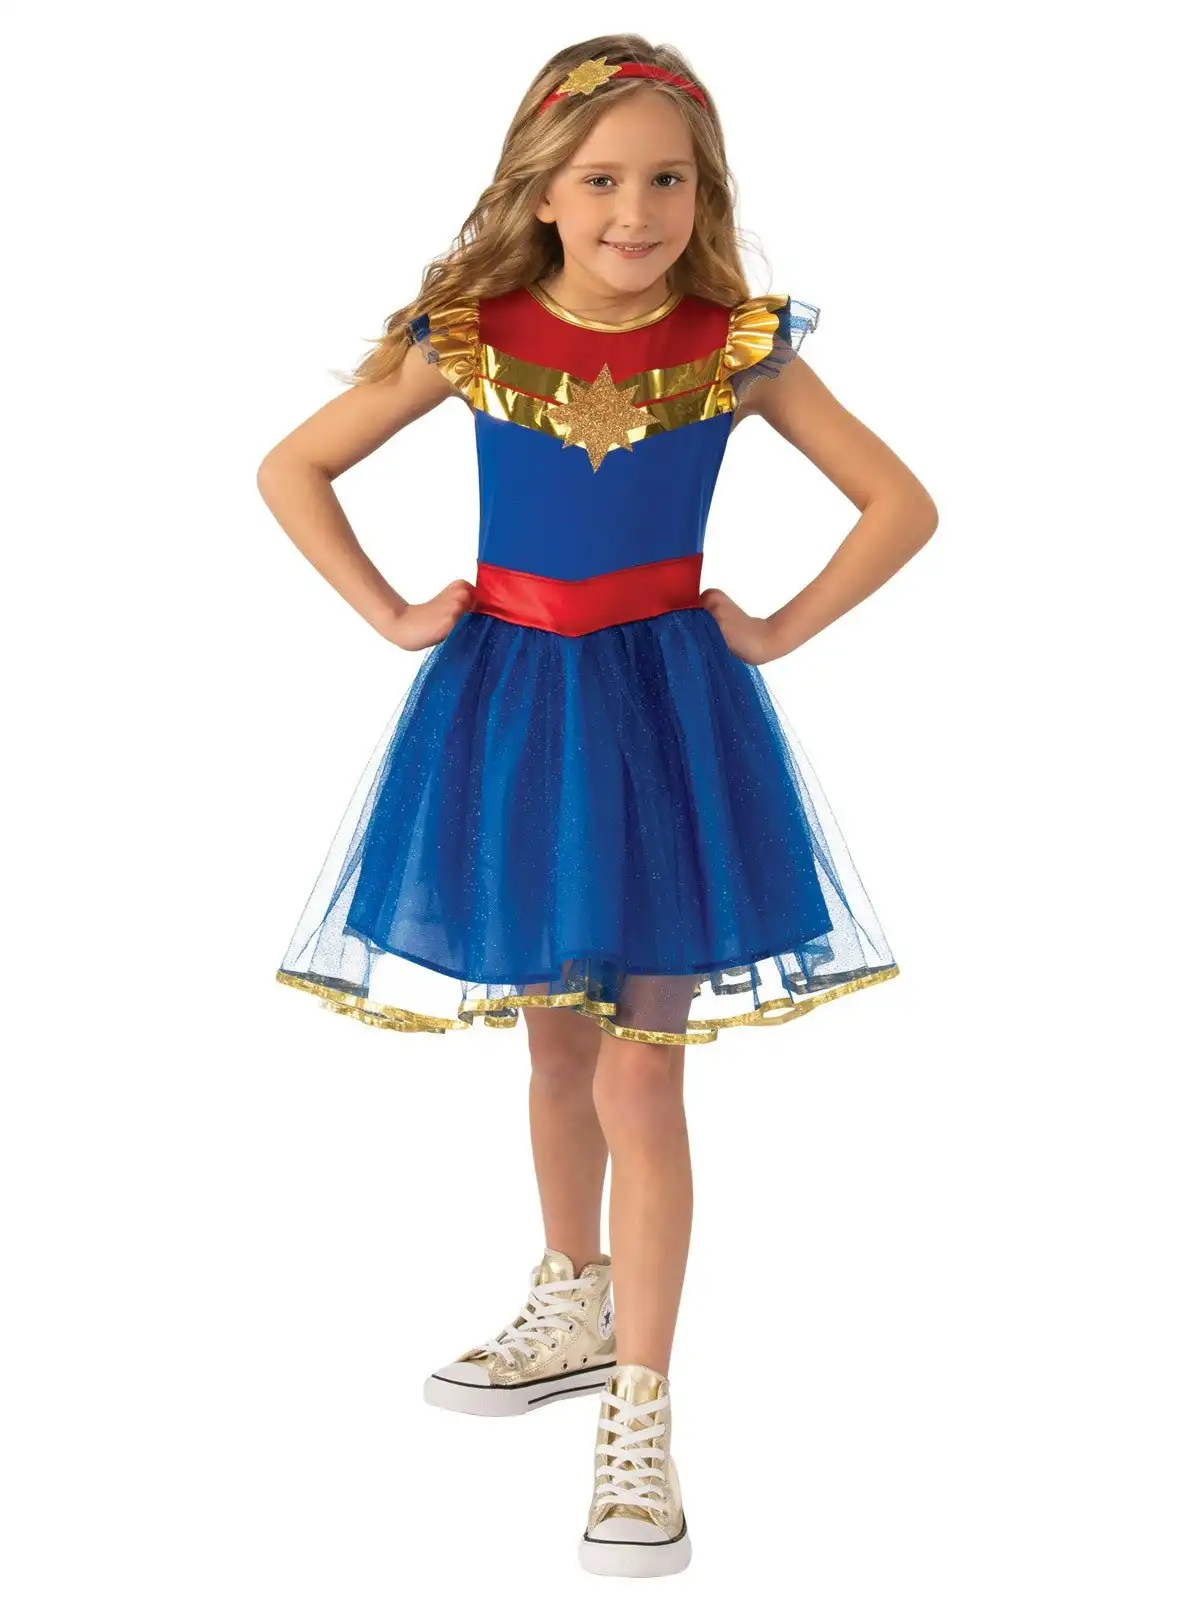 Marvel Captain Tutu Dress Up Party Costume Kids/Children/Girls Size 4-6